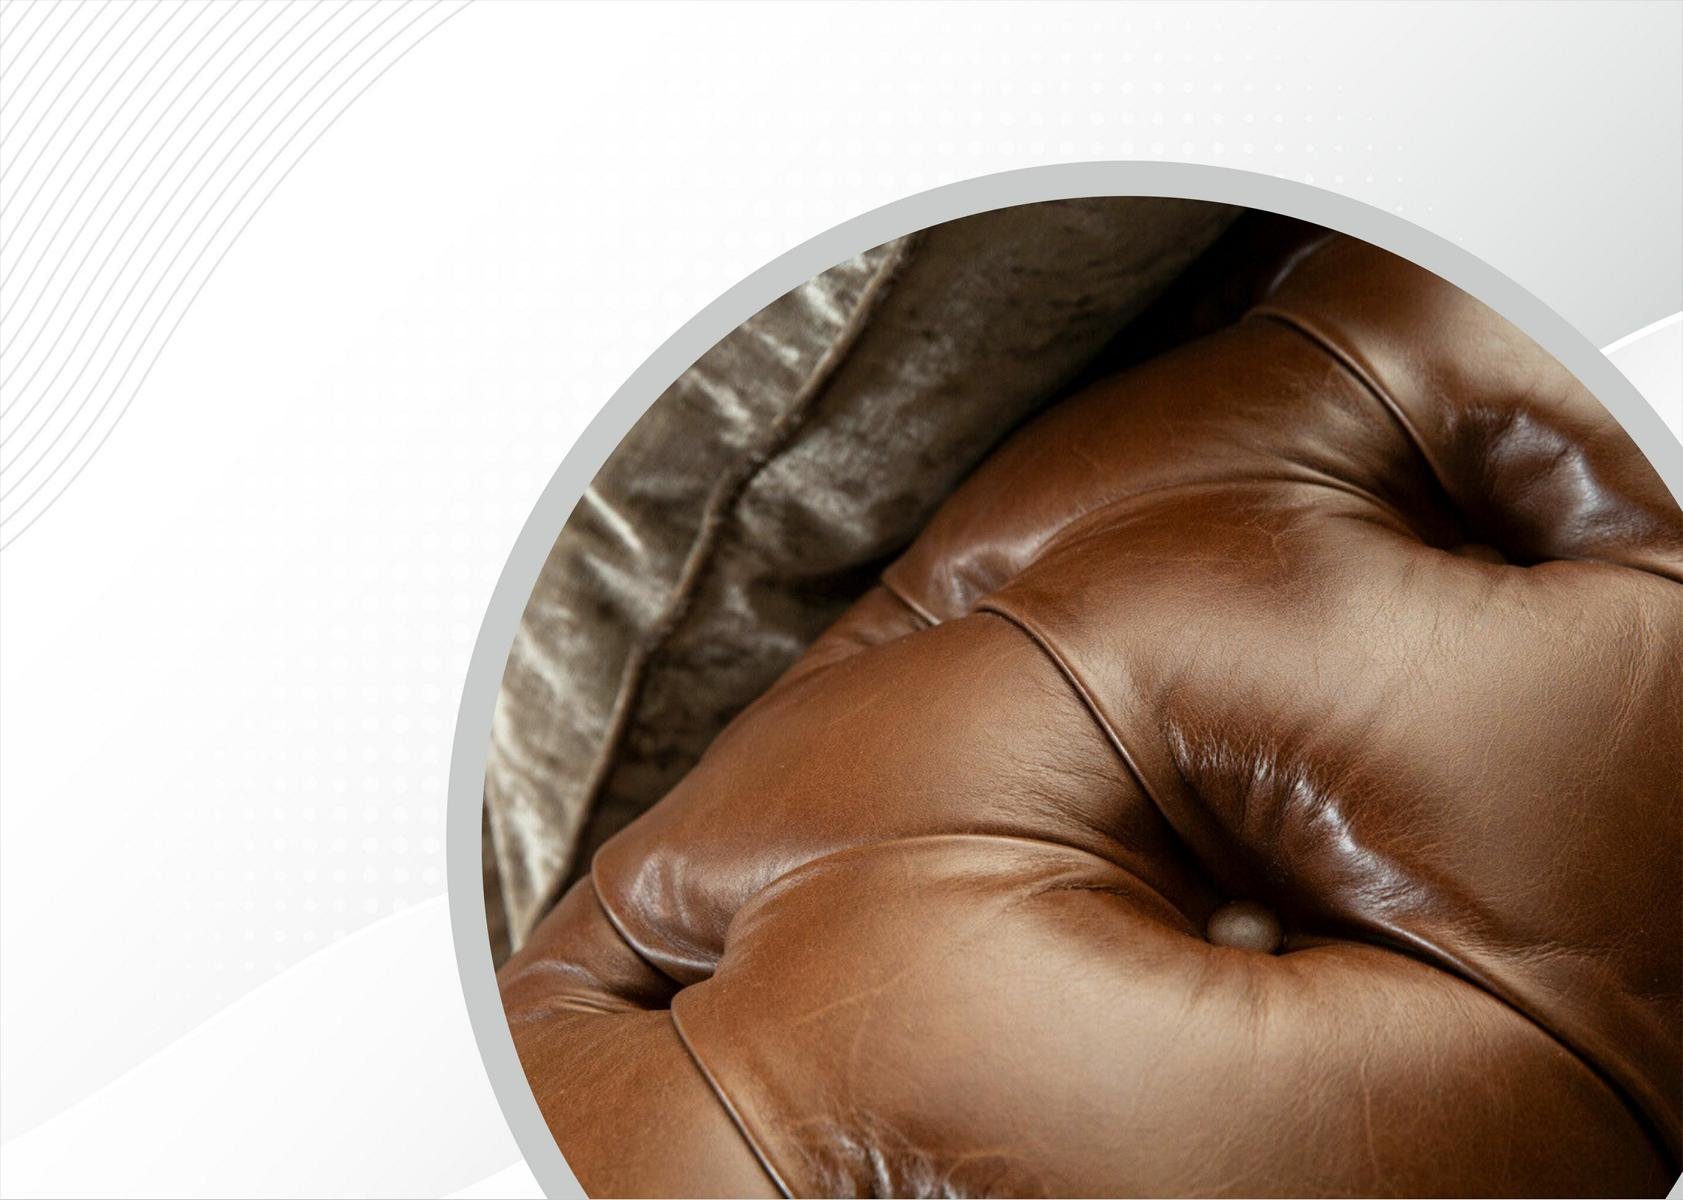 cm 185 Sitzer 2 Design JVmoebel Chesterfield-Sofa, Chesterfield Sofa Couch